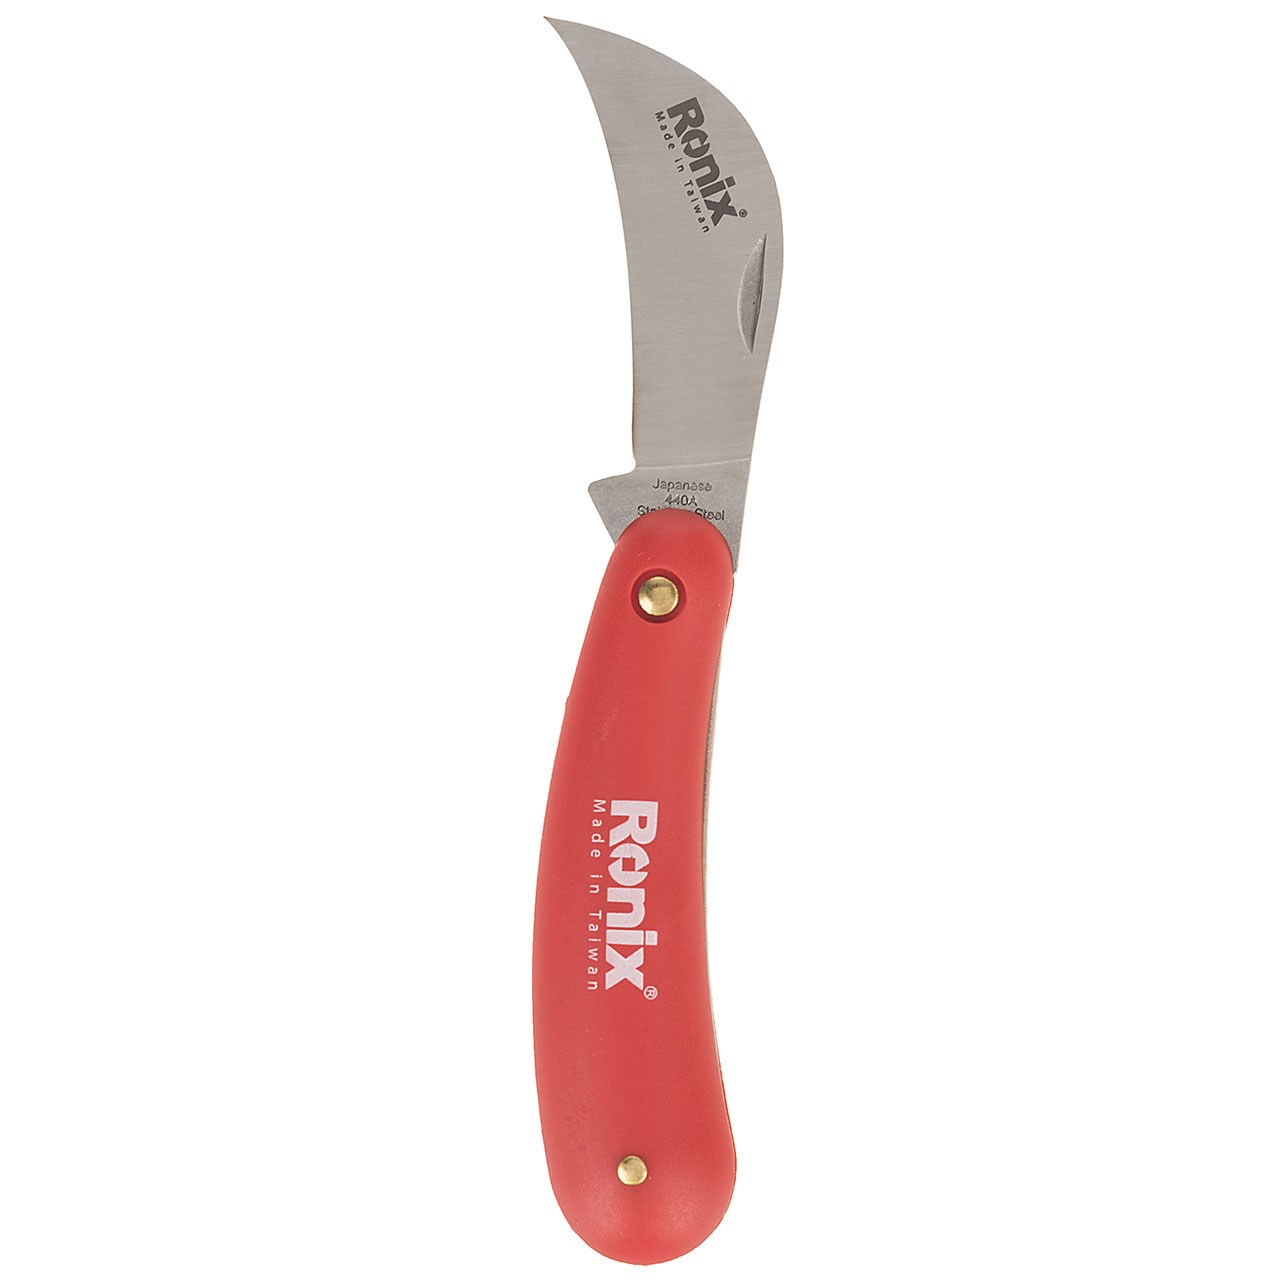 چاقوی باغبانی رونیکس مدل RH-3135